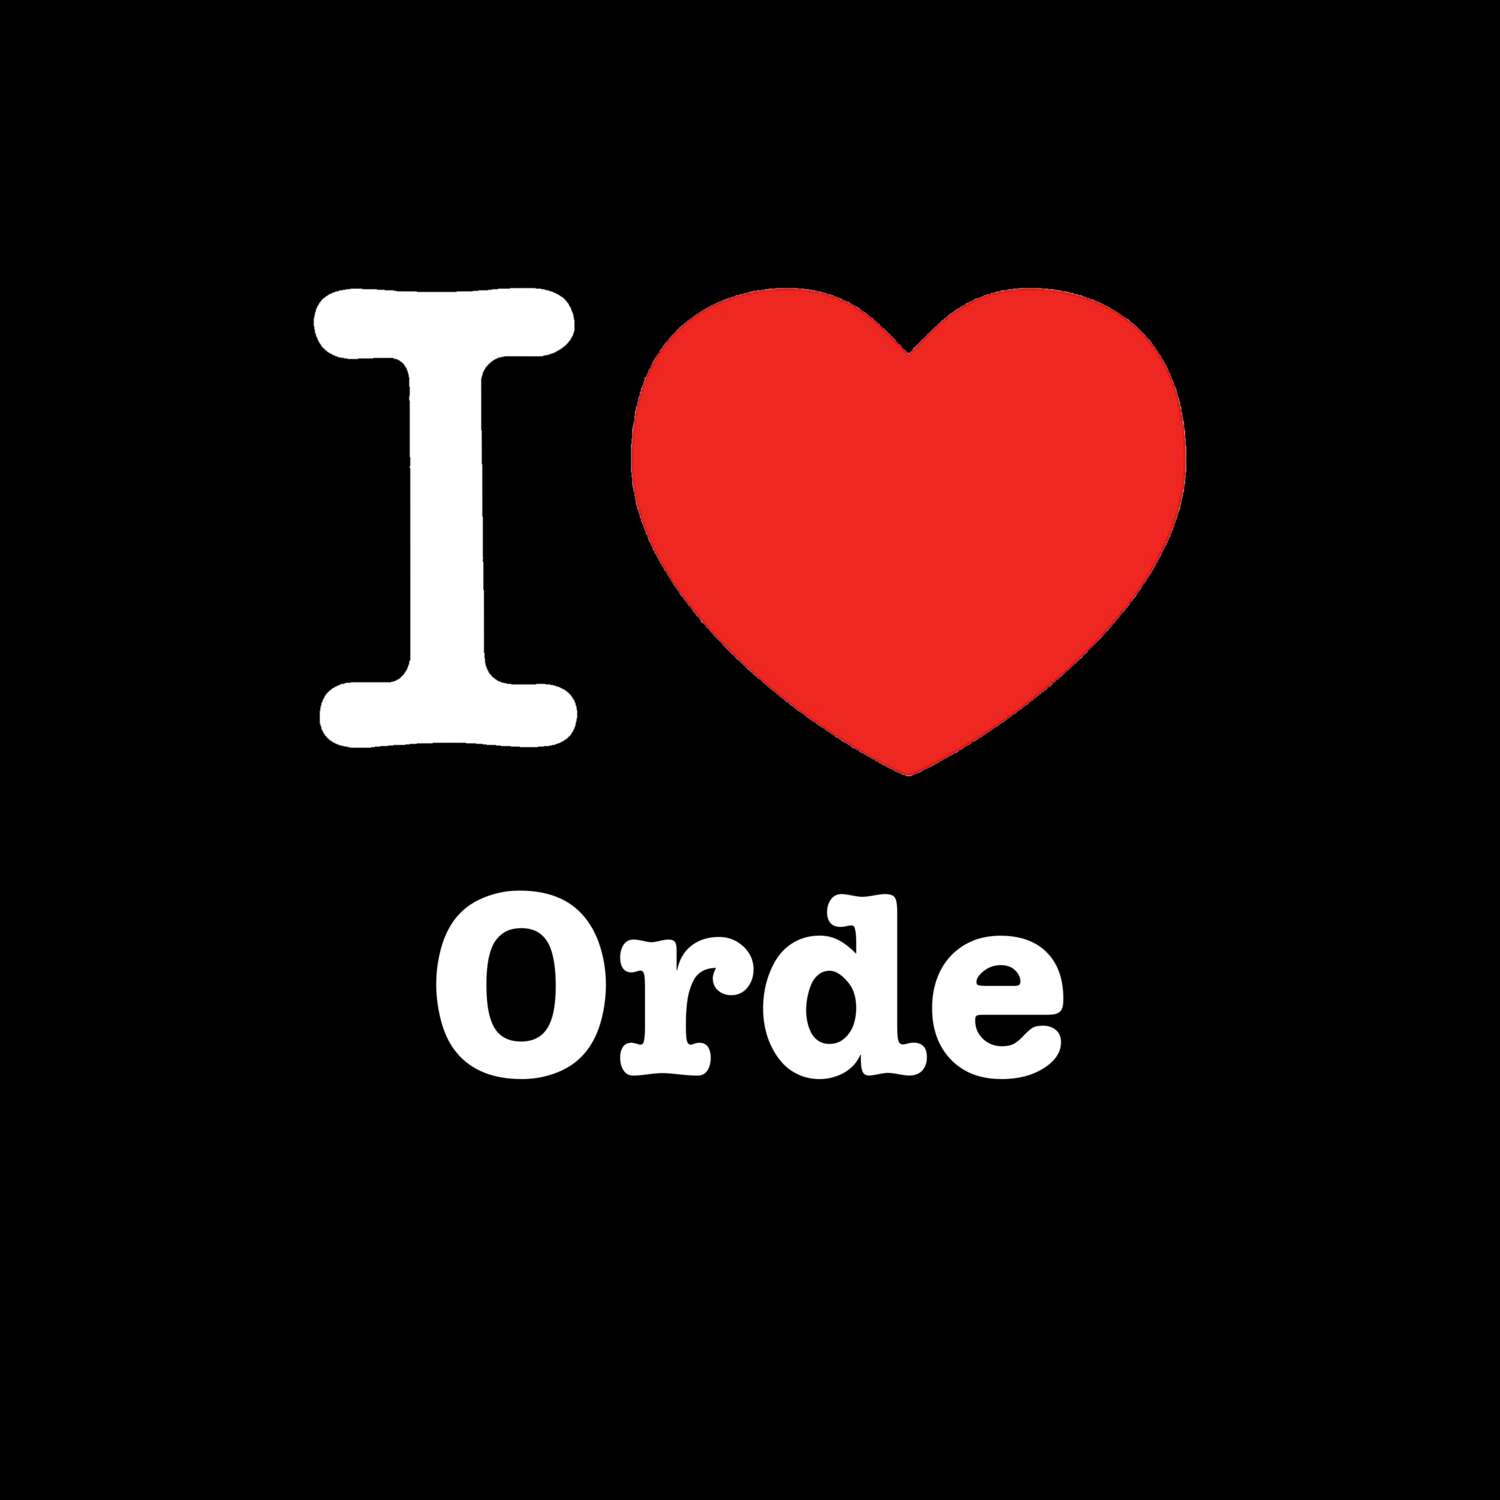 Orde T-Shirt »I love«